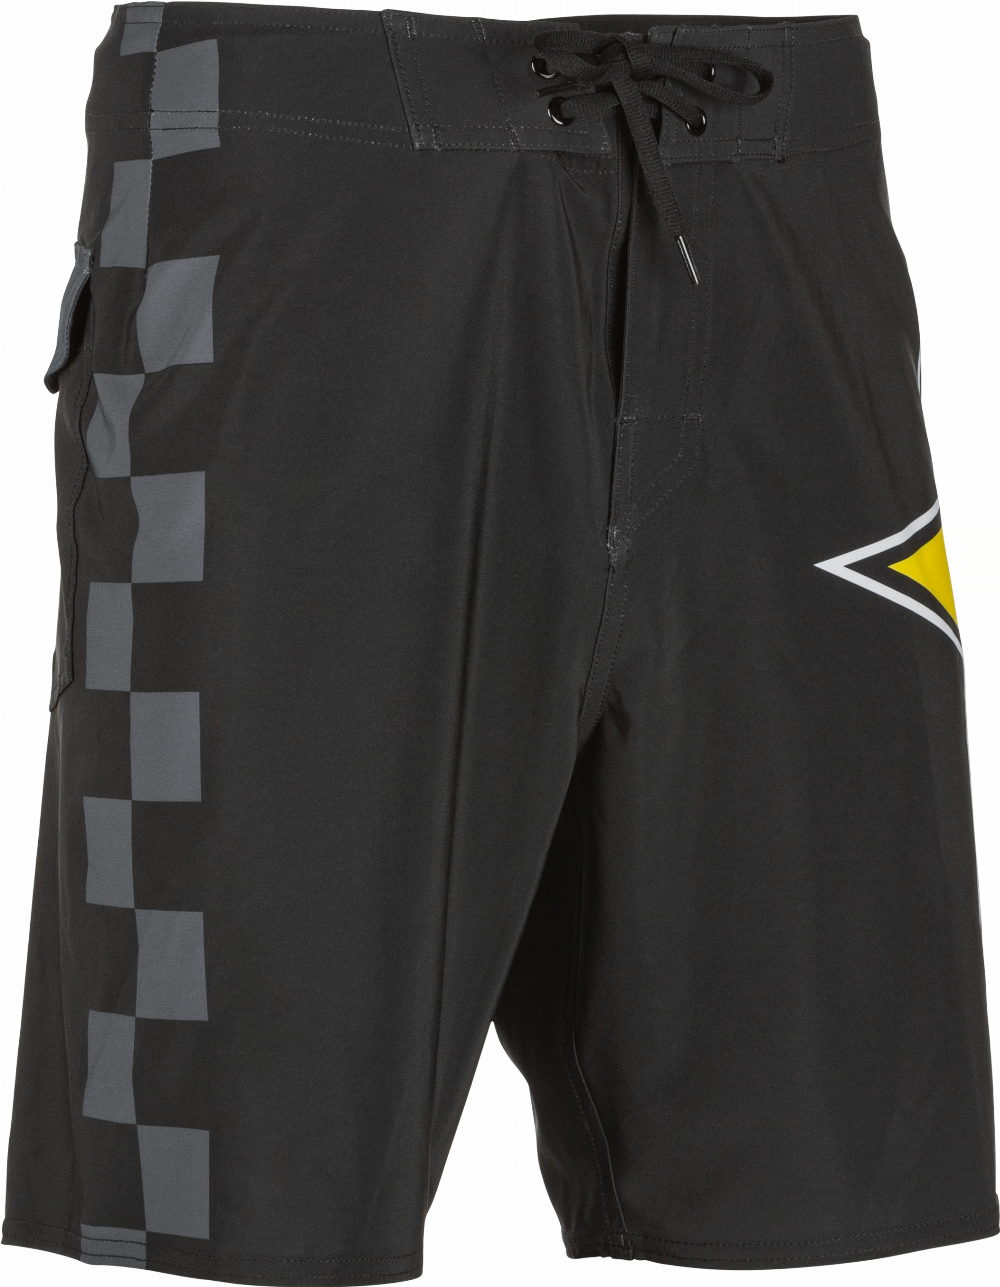 Fly Racing Rockstar Boardshorts Black/Grey Size 38 #FRROBS-P